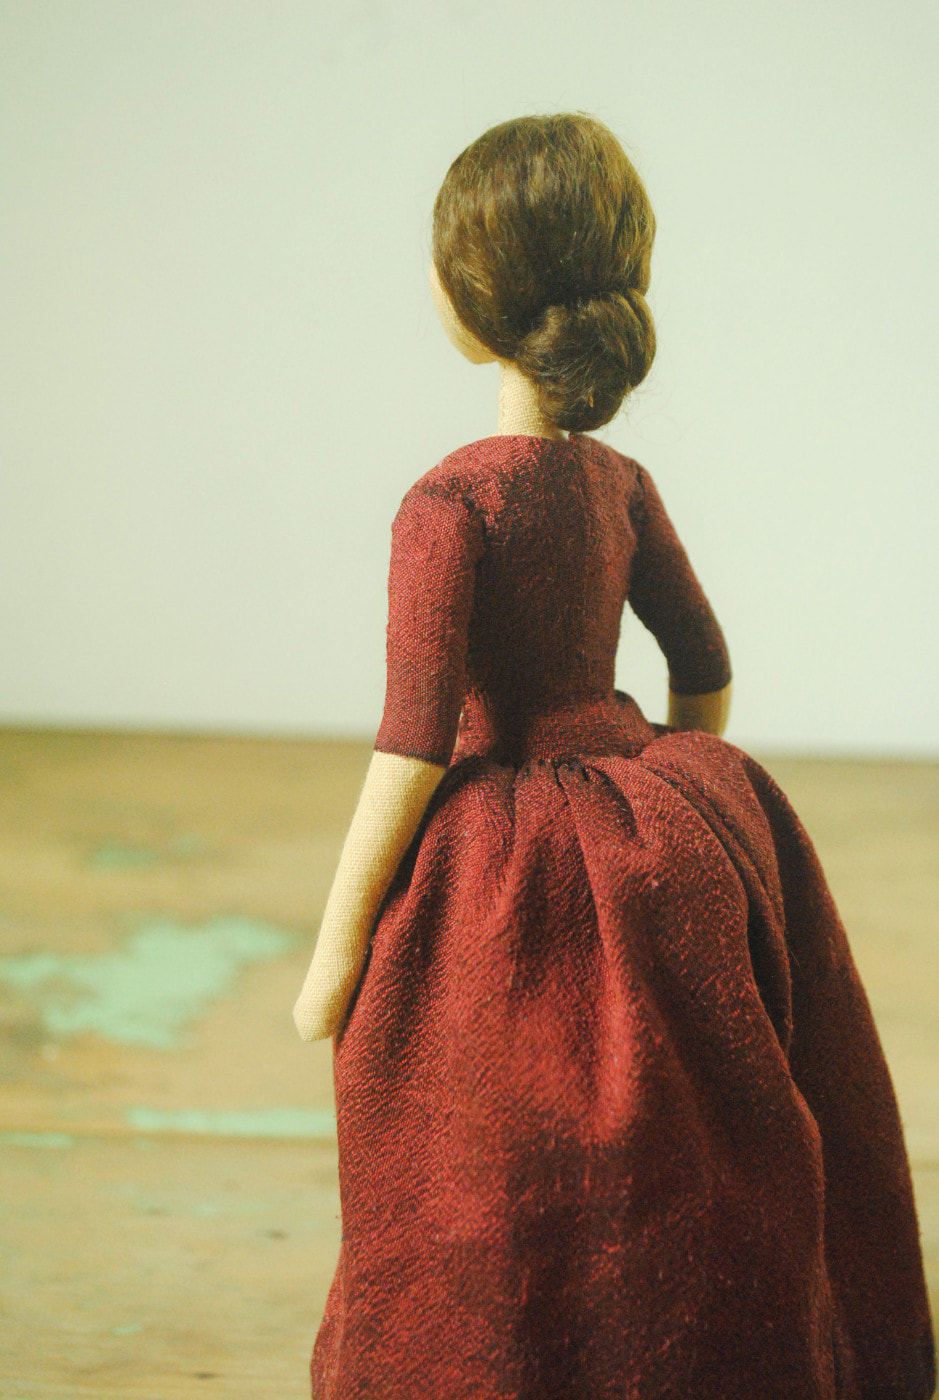 Willowynn doll by Margeaux Davis